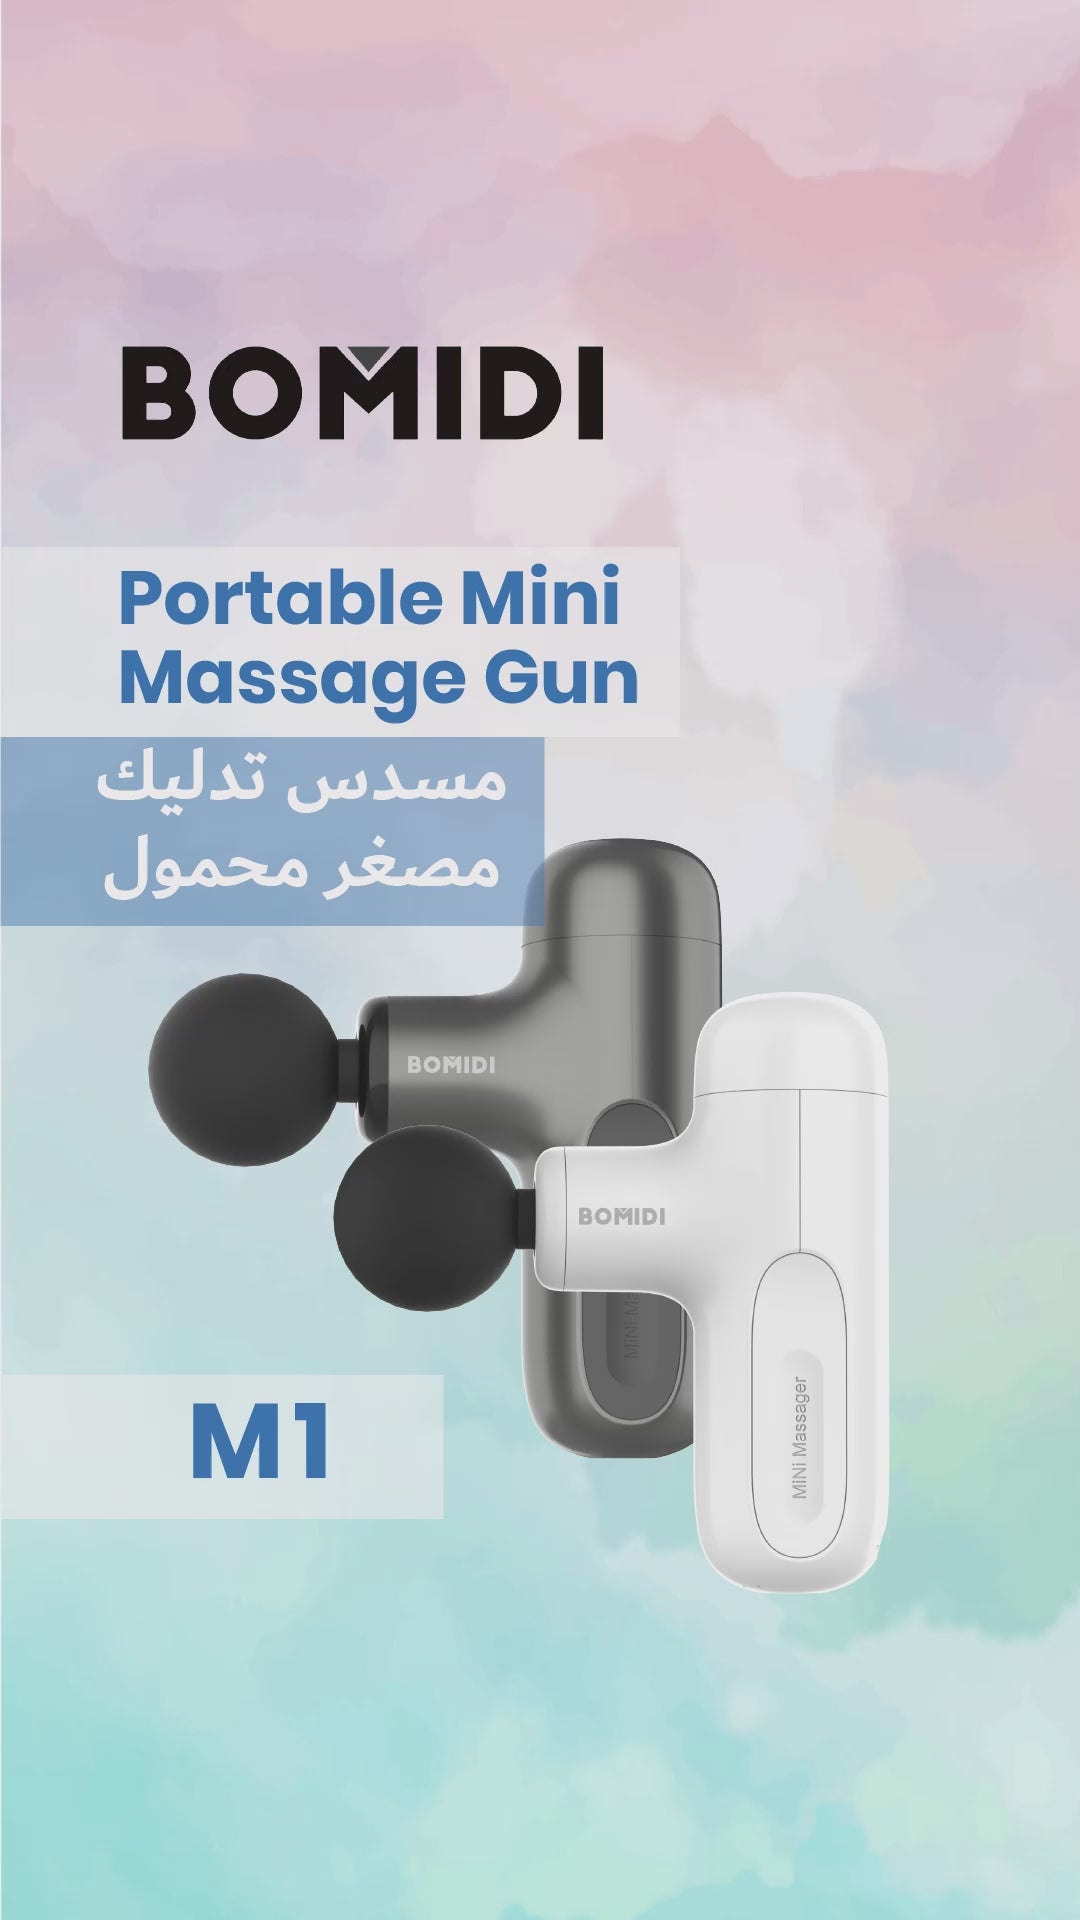 Bomidi M1 Portable Mini Massage Gun With High Torque Motor